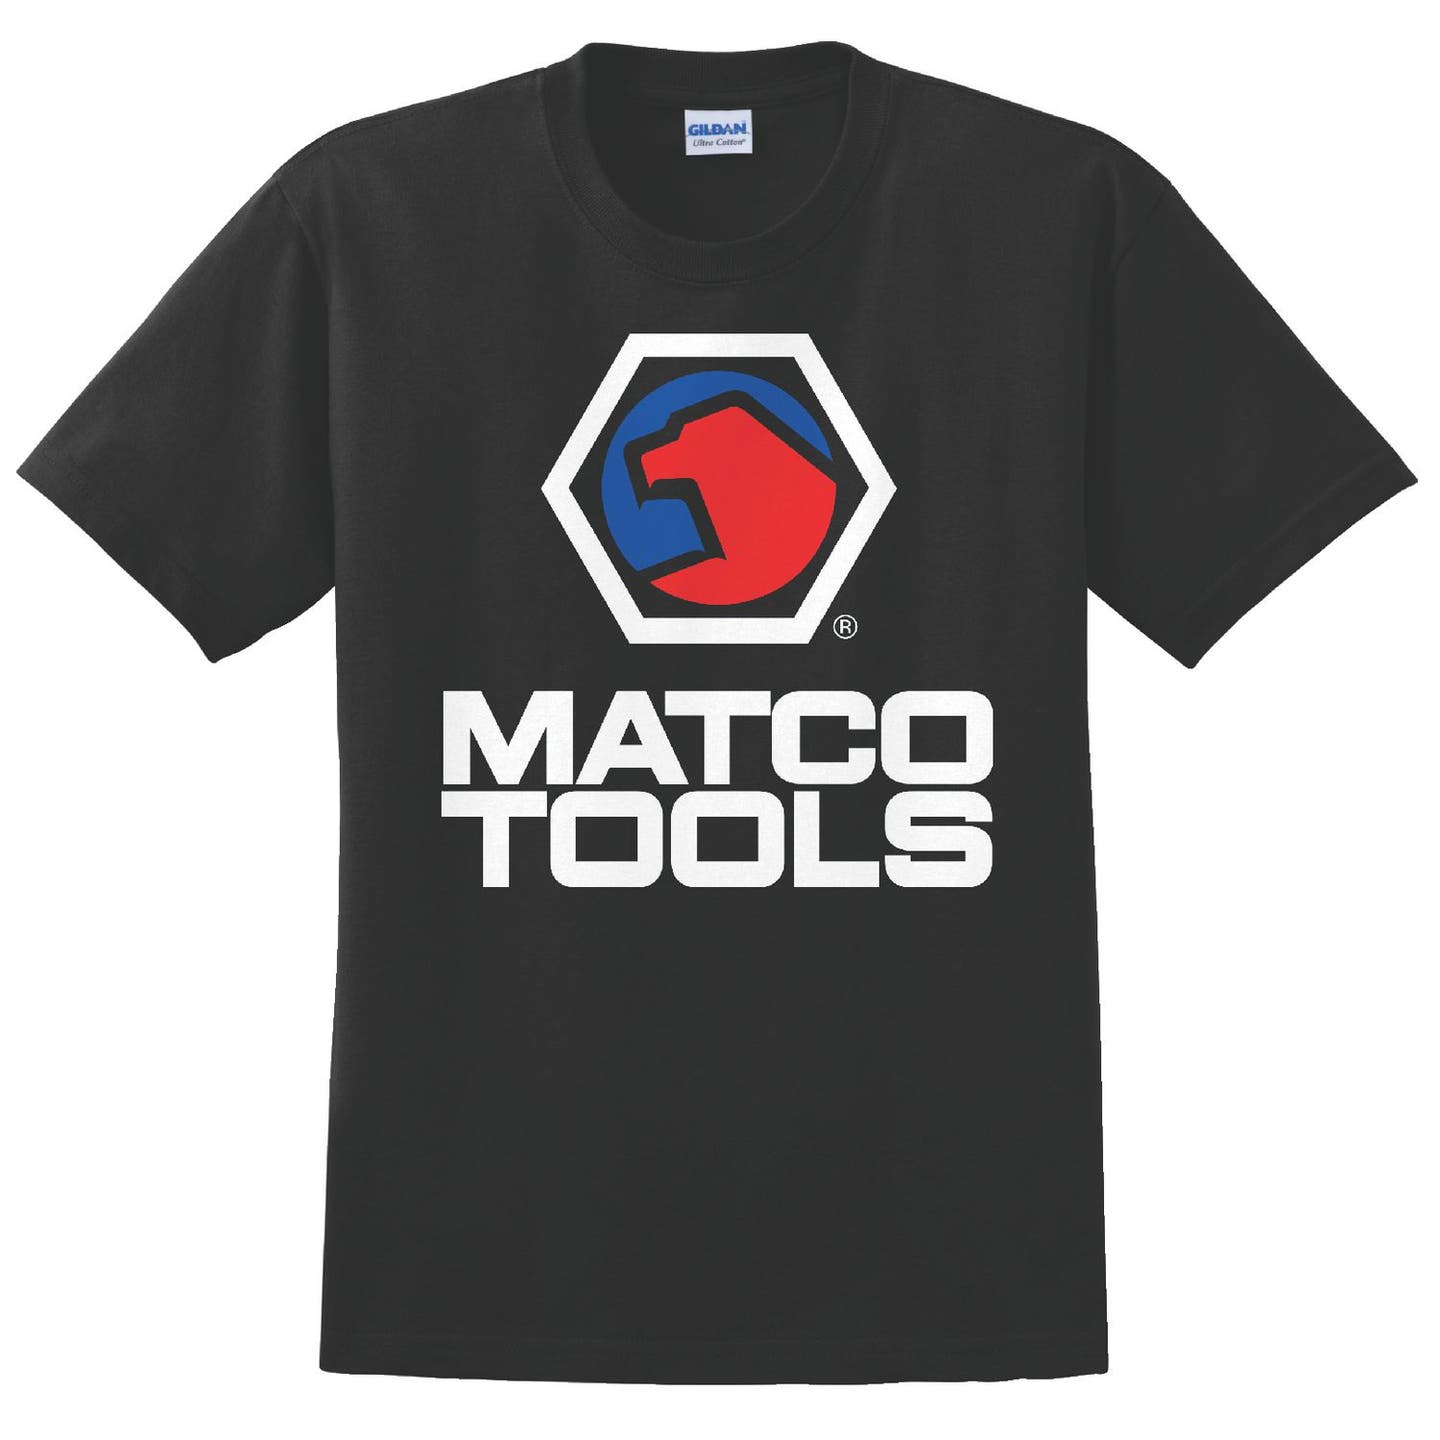 MEN'S BLACK TEAM SHOP T-SHIRT WITH ICONIC MATCO LOGO - M